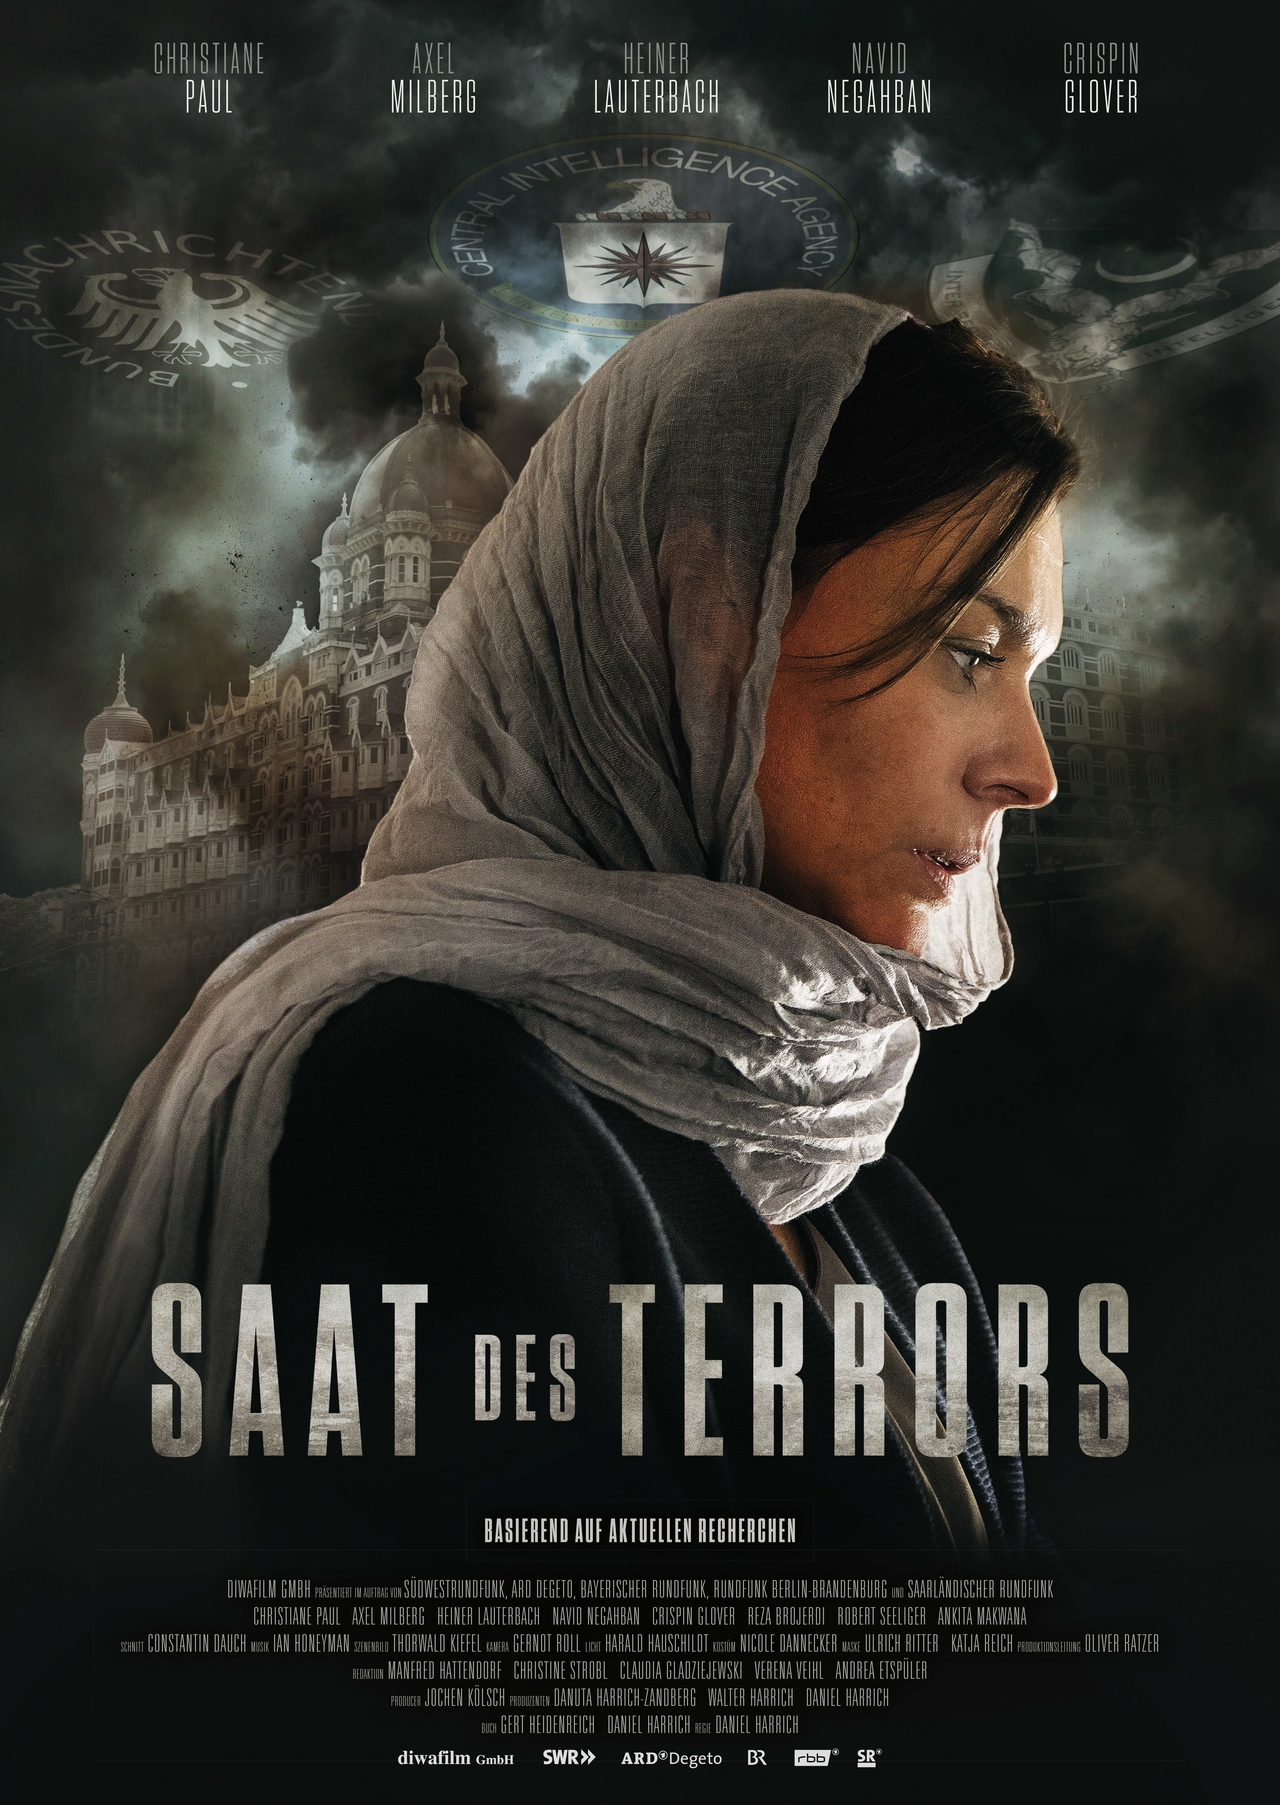 Christiane Paul در صحنه فیلم سینمایی Saat des Terrors به همراه نوید نگهبان، Axel Milberg و Heiner Lauterbach